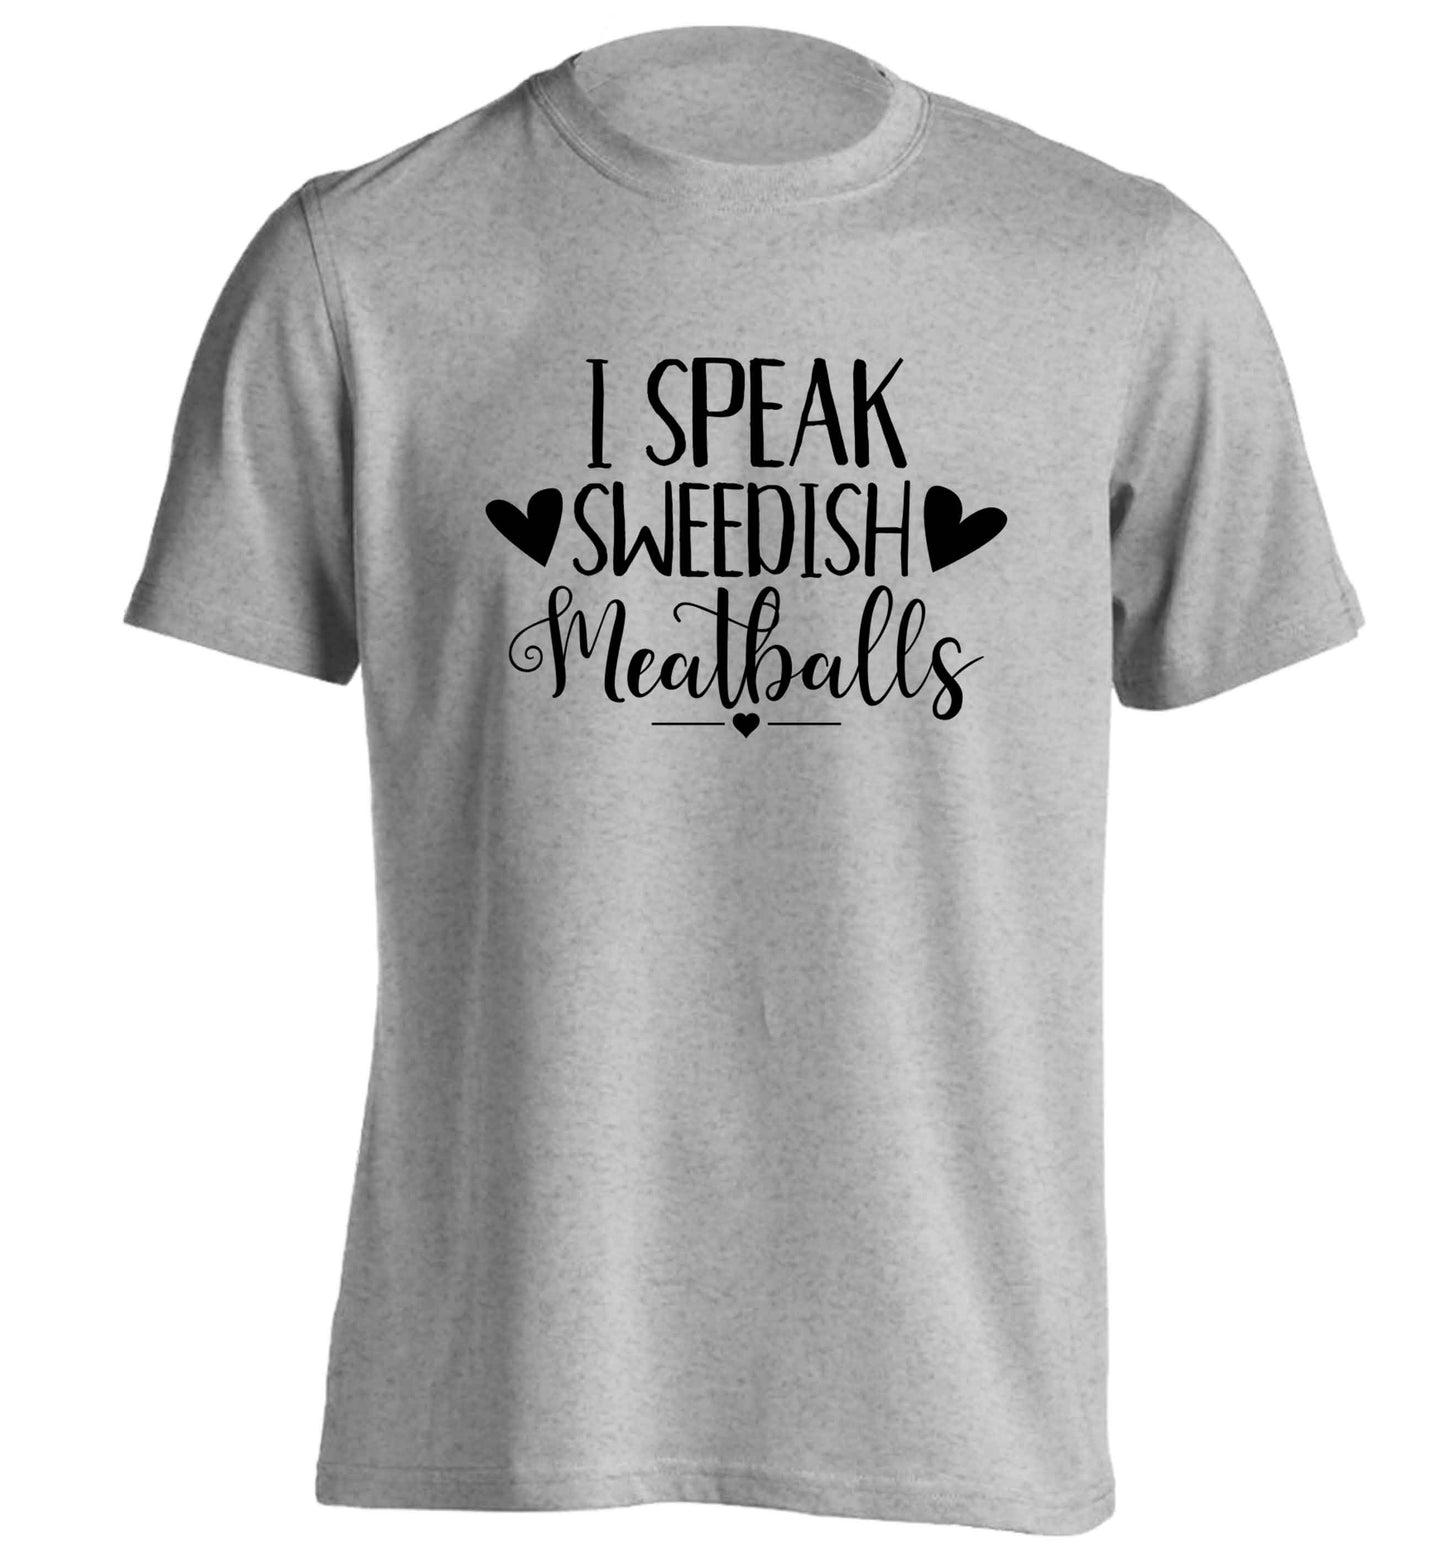 I speak sweedish...meatballs adults unisex grey Tshirt 2XL